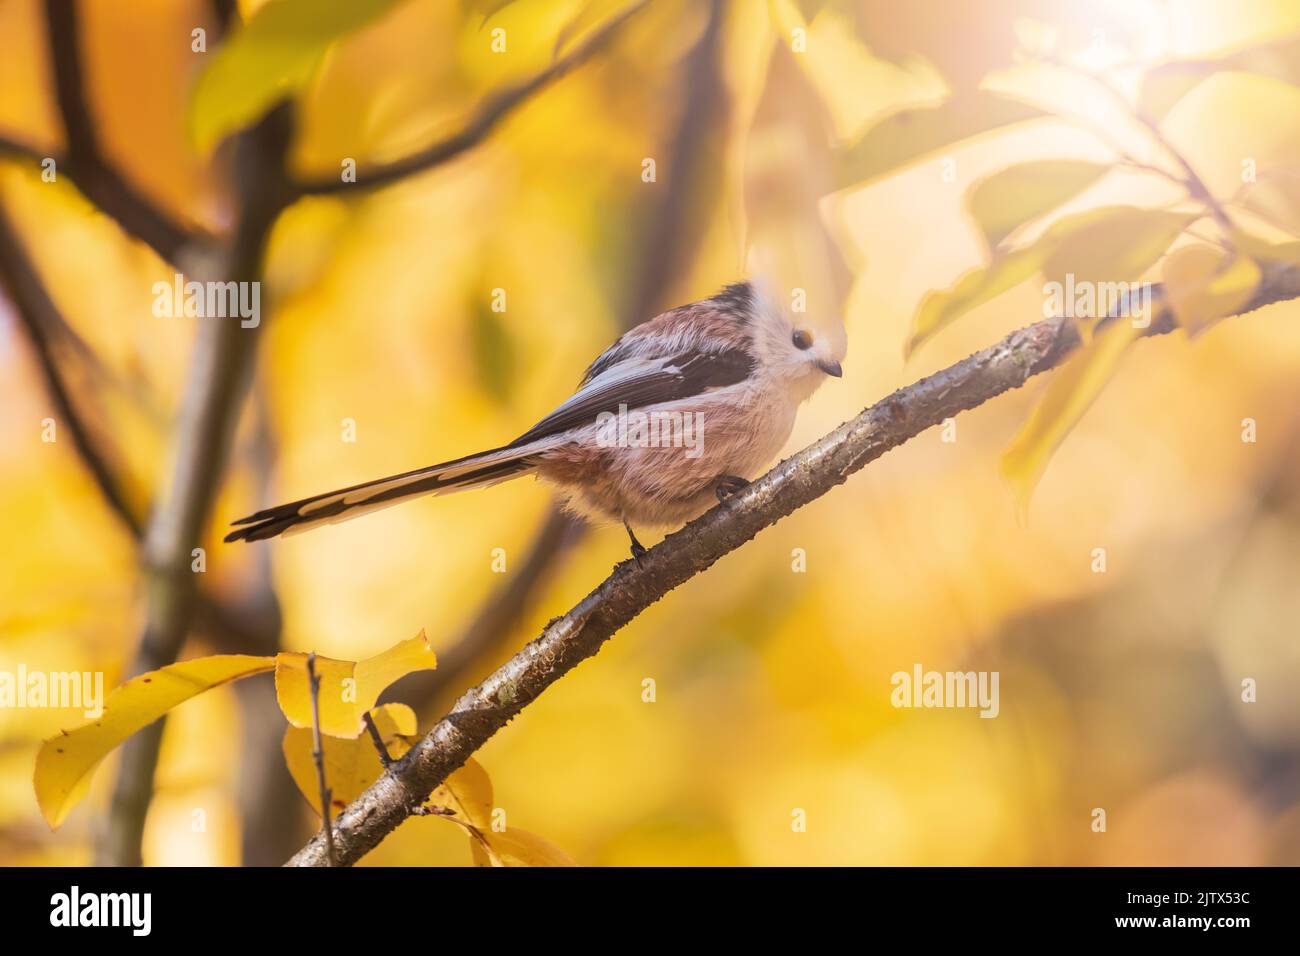 small beautiful bird among golden leaves Stock Photo